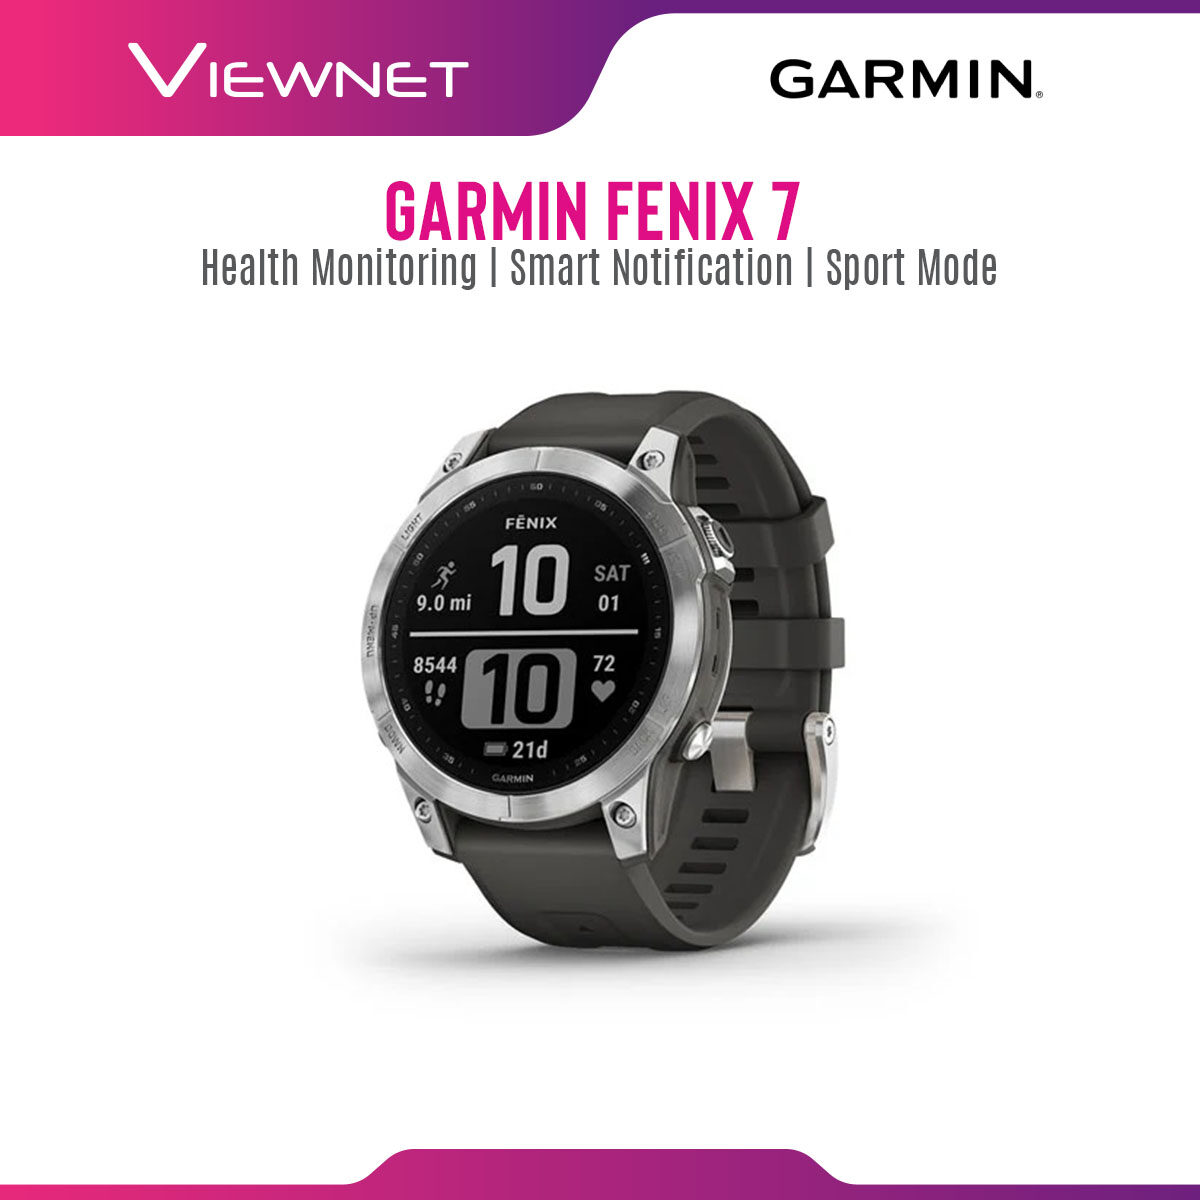 [Ready Stock] Garmin Fenix 7 / Fenix 7 Sapphire Solar Smartwatch with Health Monitoring, Smart Notification, Sport Mode, Garmin Connect App